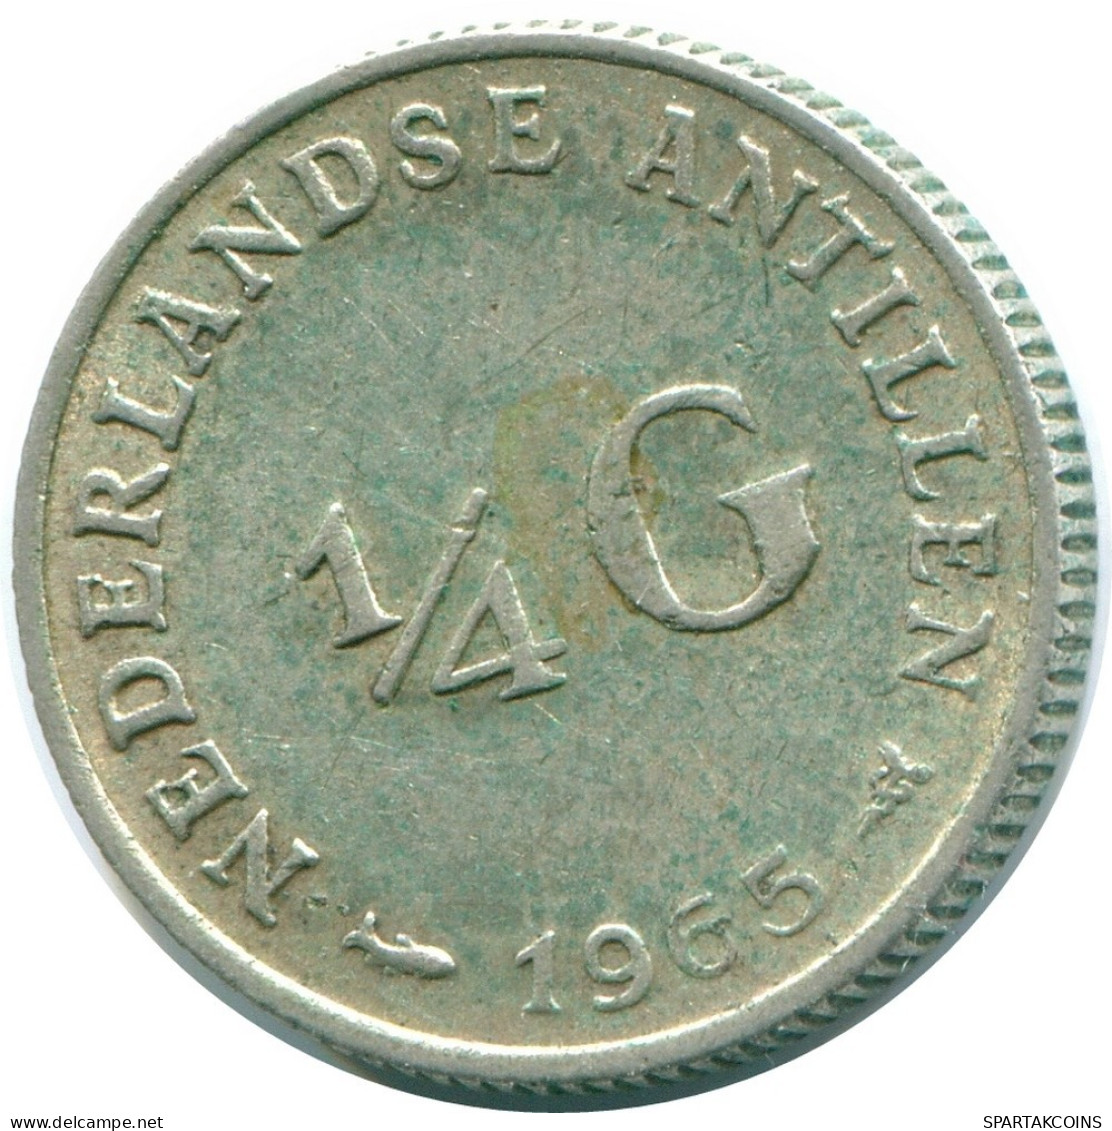 1/4 GULDEN 1965 NETHERLANDS ANTILLES SILVER Colonial Coin #NL11417.4.U.A - Antilles Néerlandaises